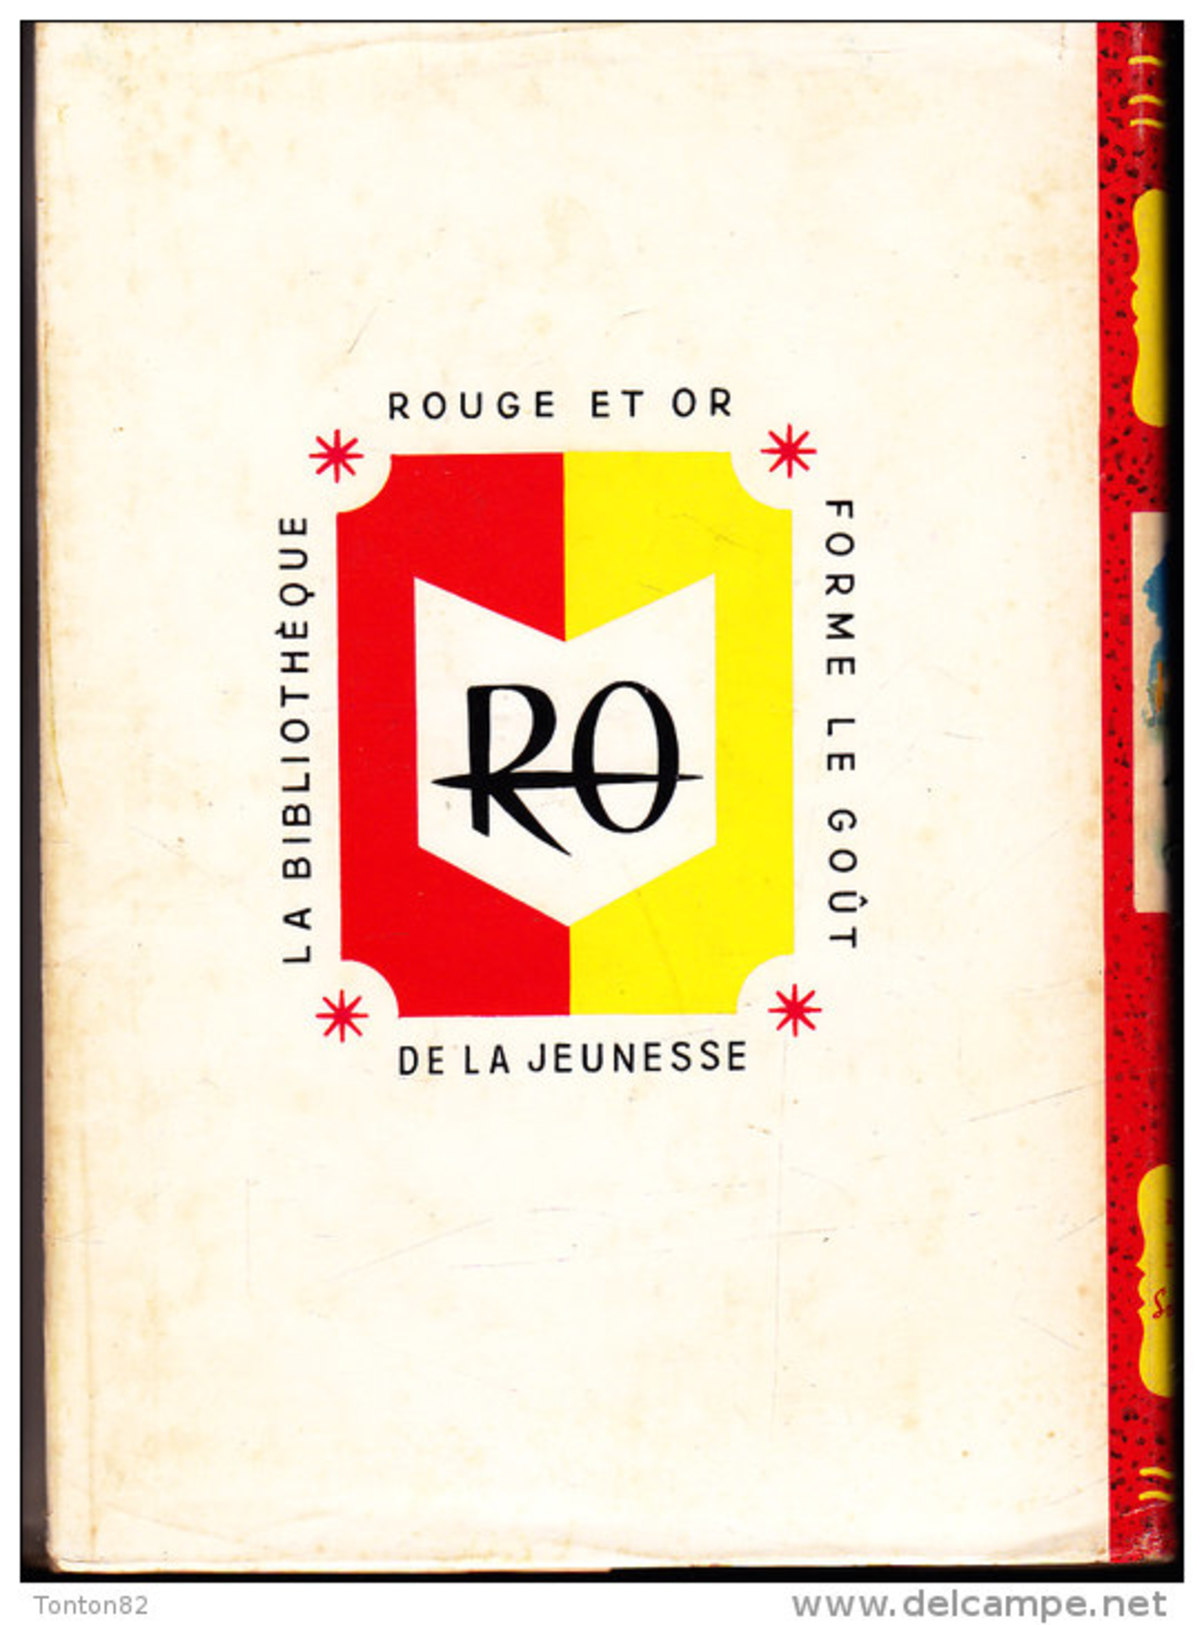 Lisbeth Werner -  Puck Dans La Neige - Bibliothèque Rouge Et Or  - (1961 ) - Bibliothèque Rouge Et Or